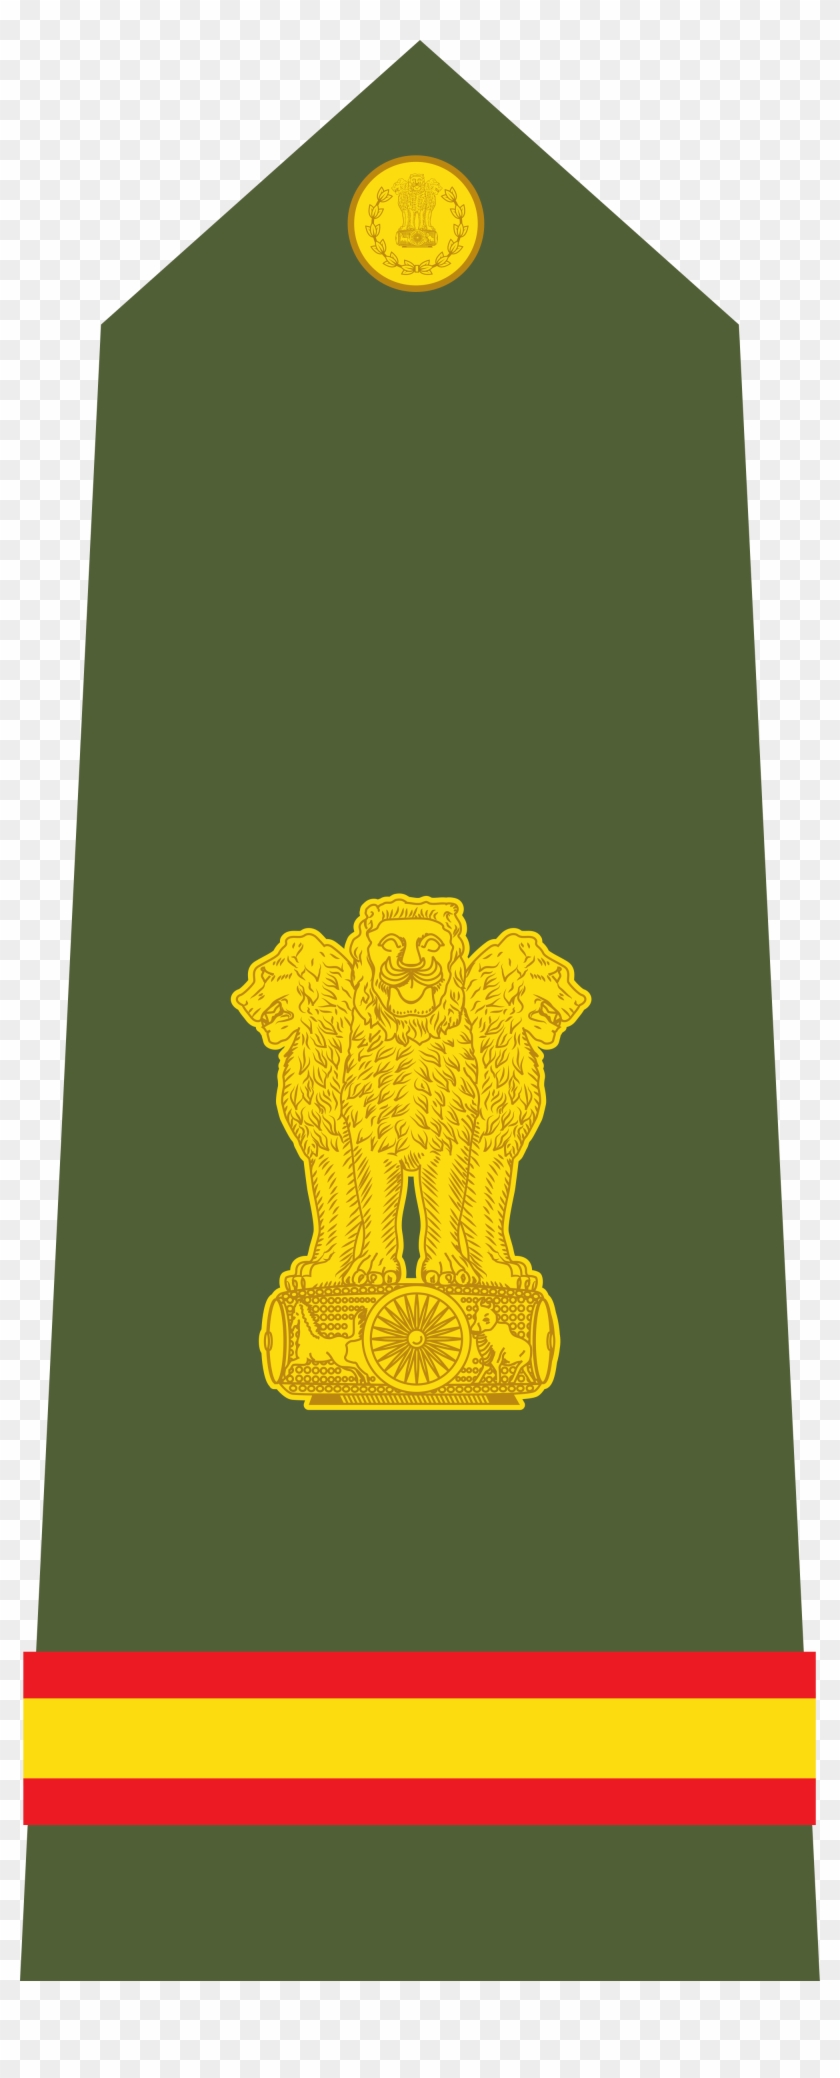 Indian Armed Forces png images | Klipartz